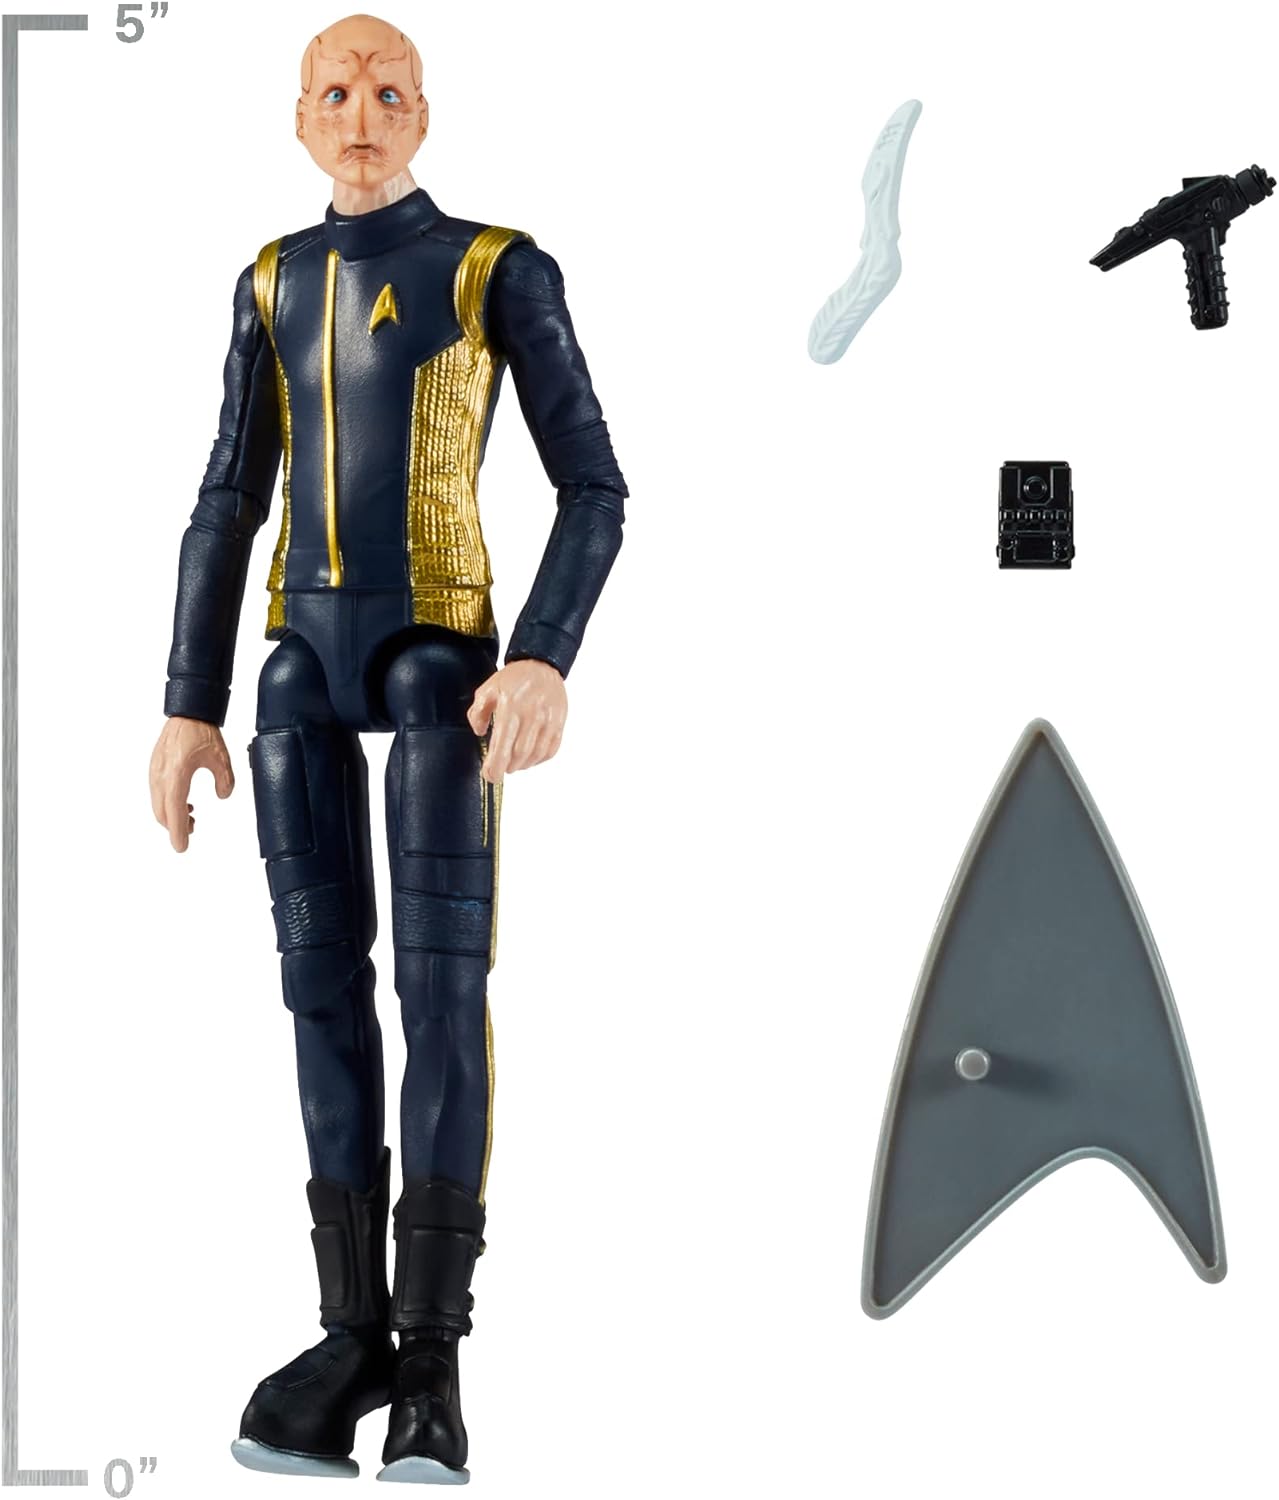 5'' Star Trek Commander Saru (DISCOVERY) Action Figure w/ Accessories $3.63 + Free S&H w/ Walmart+ or $35+